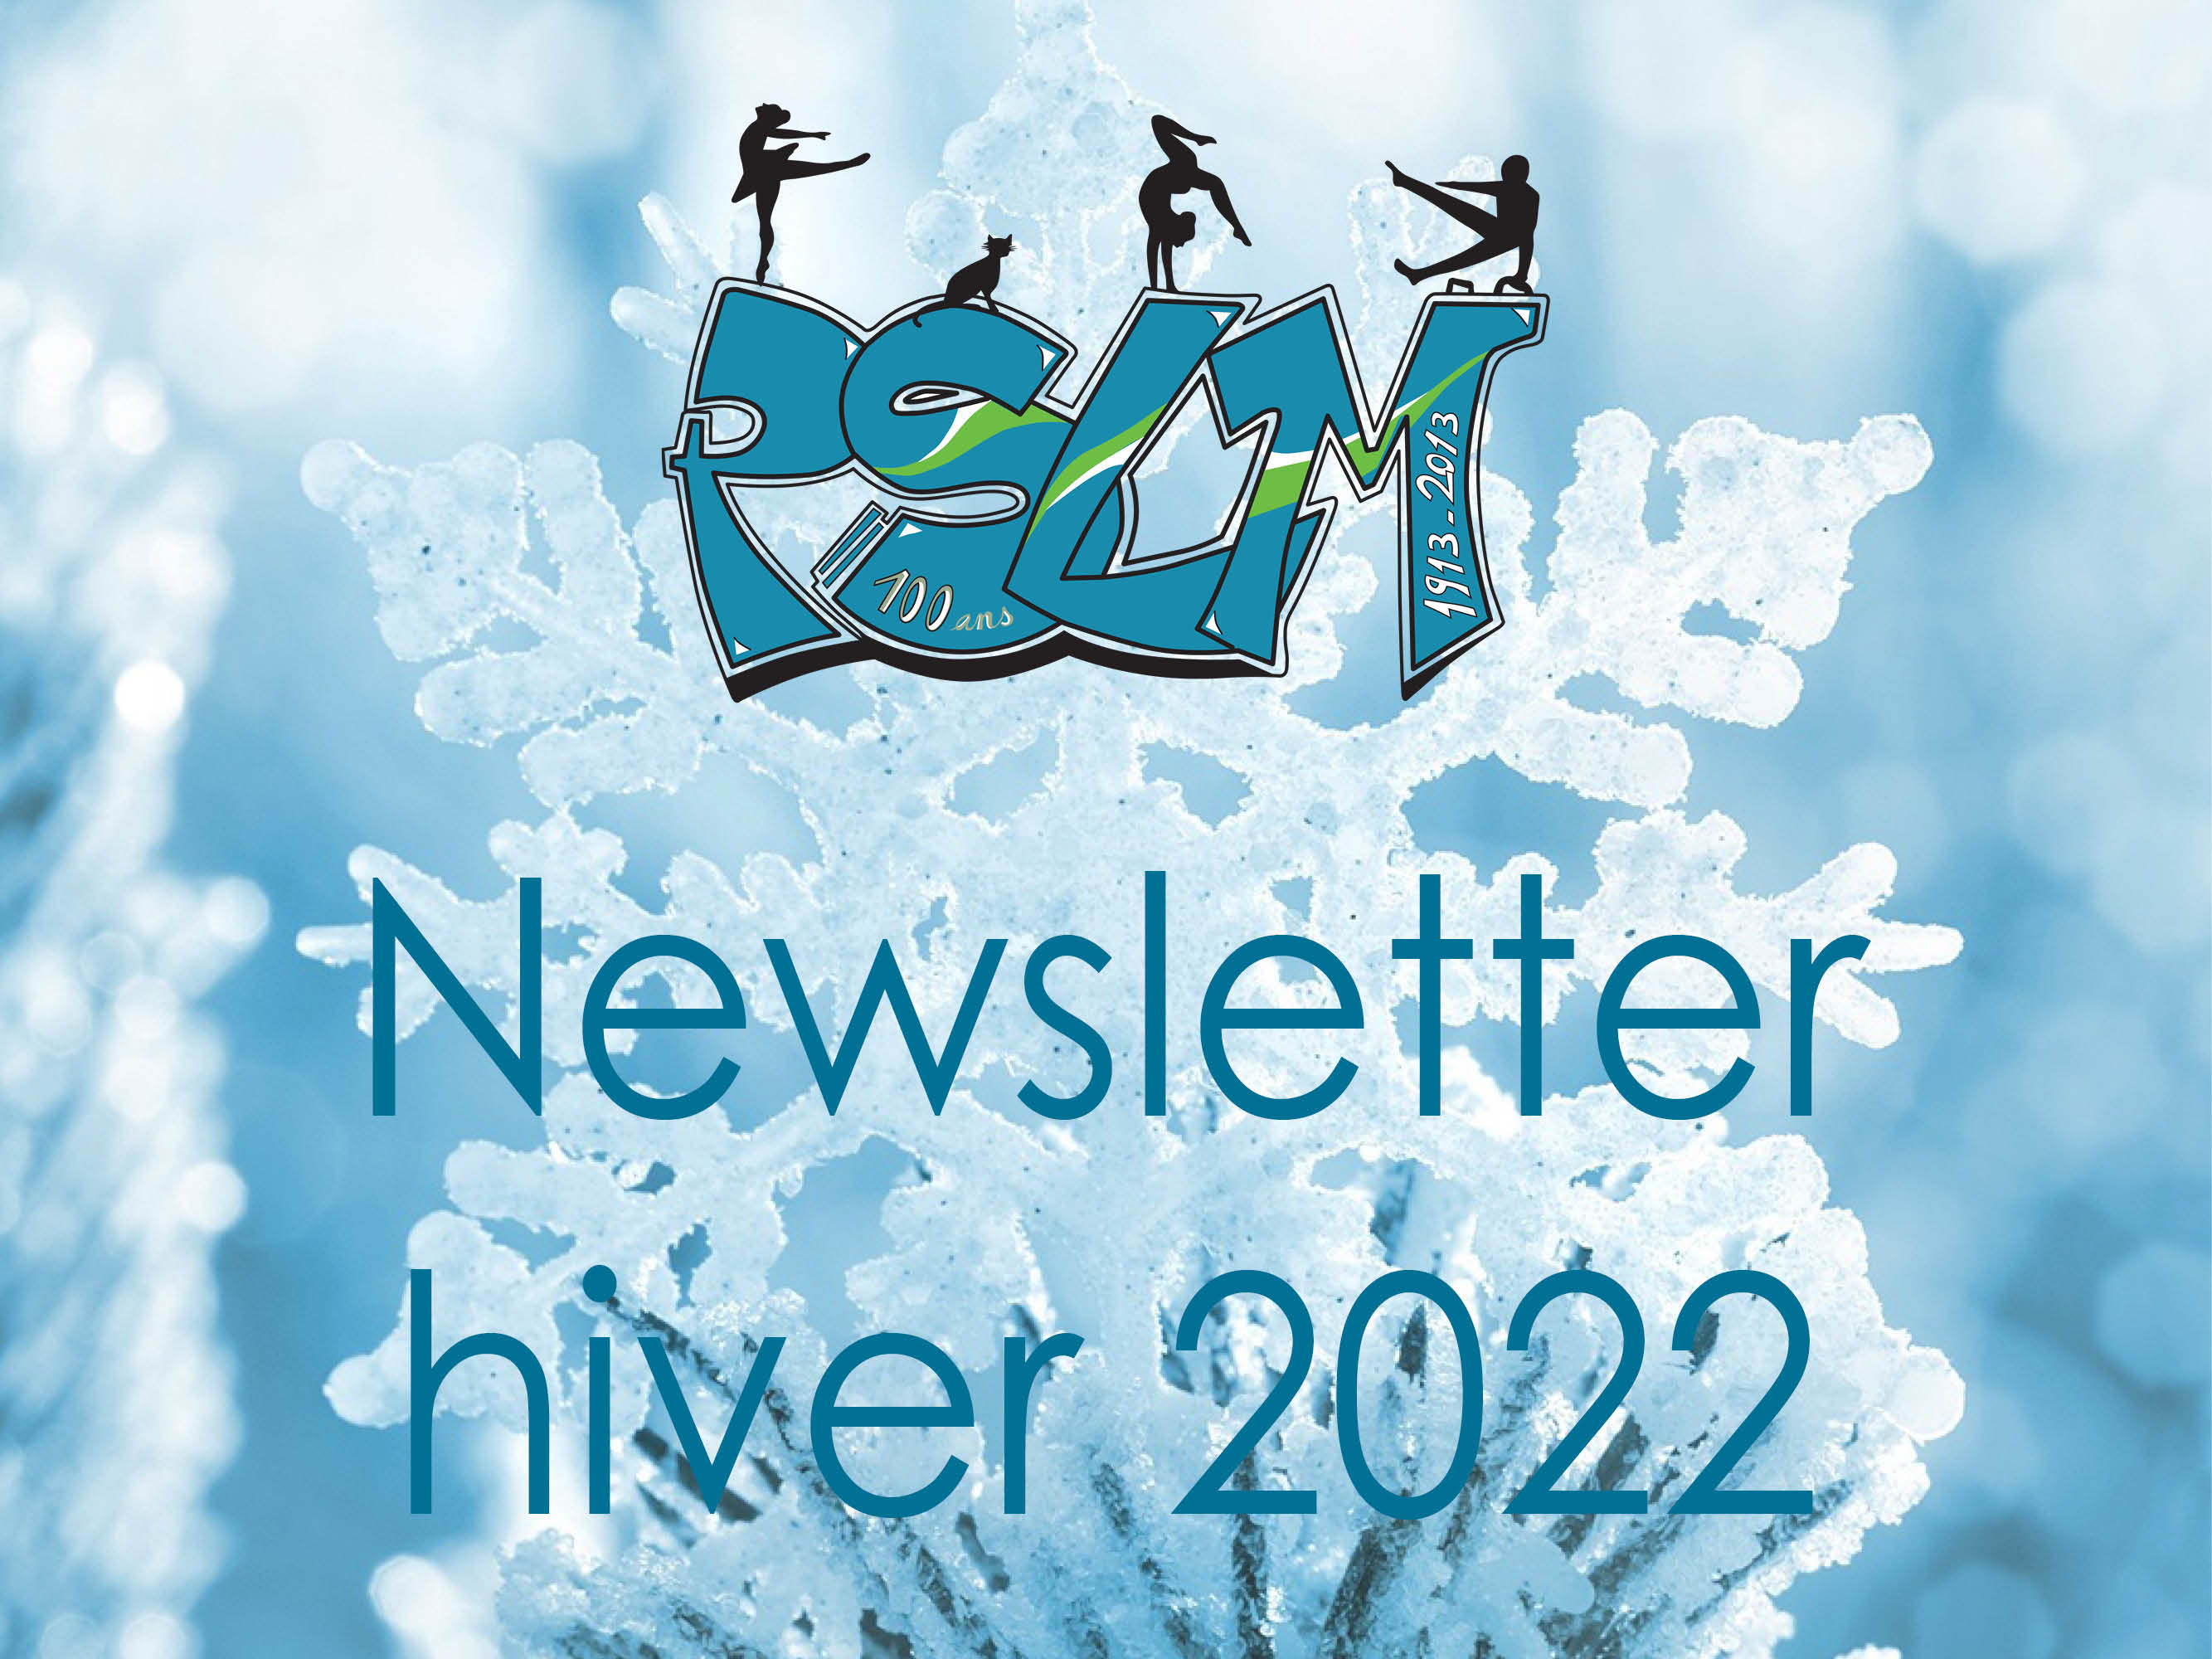 Image Newsletter hiver 2022